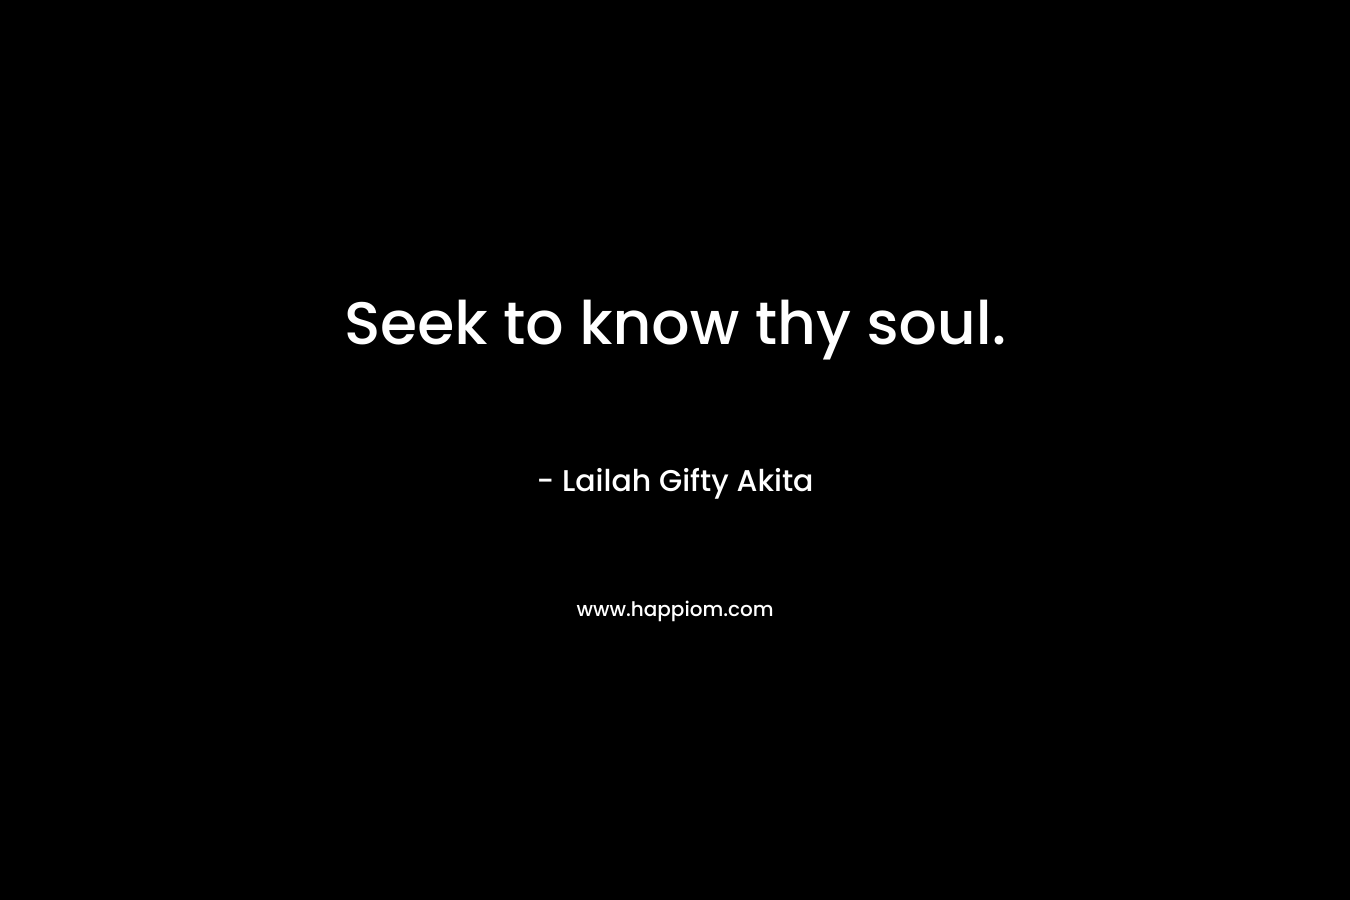 Seek to know thy soul.